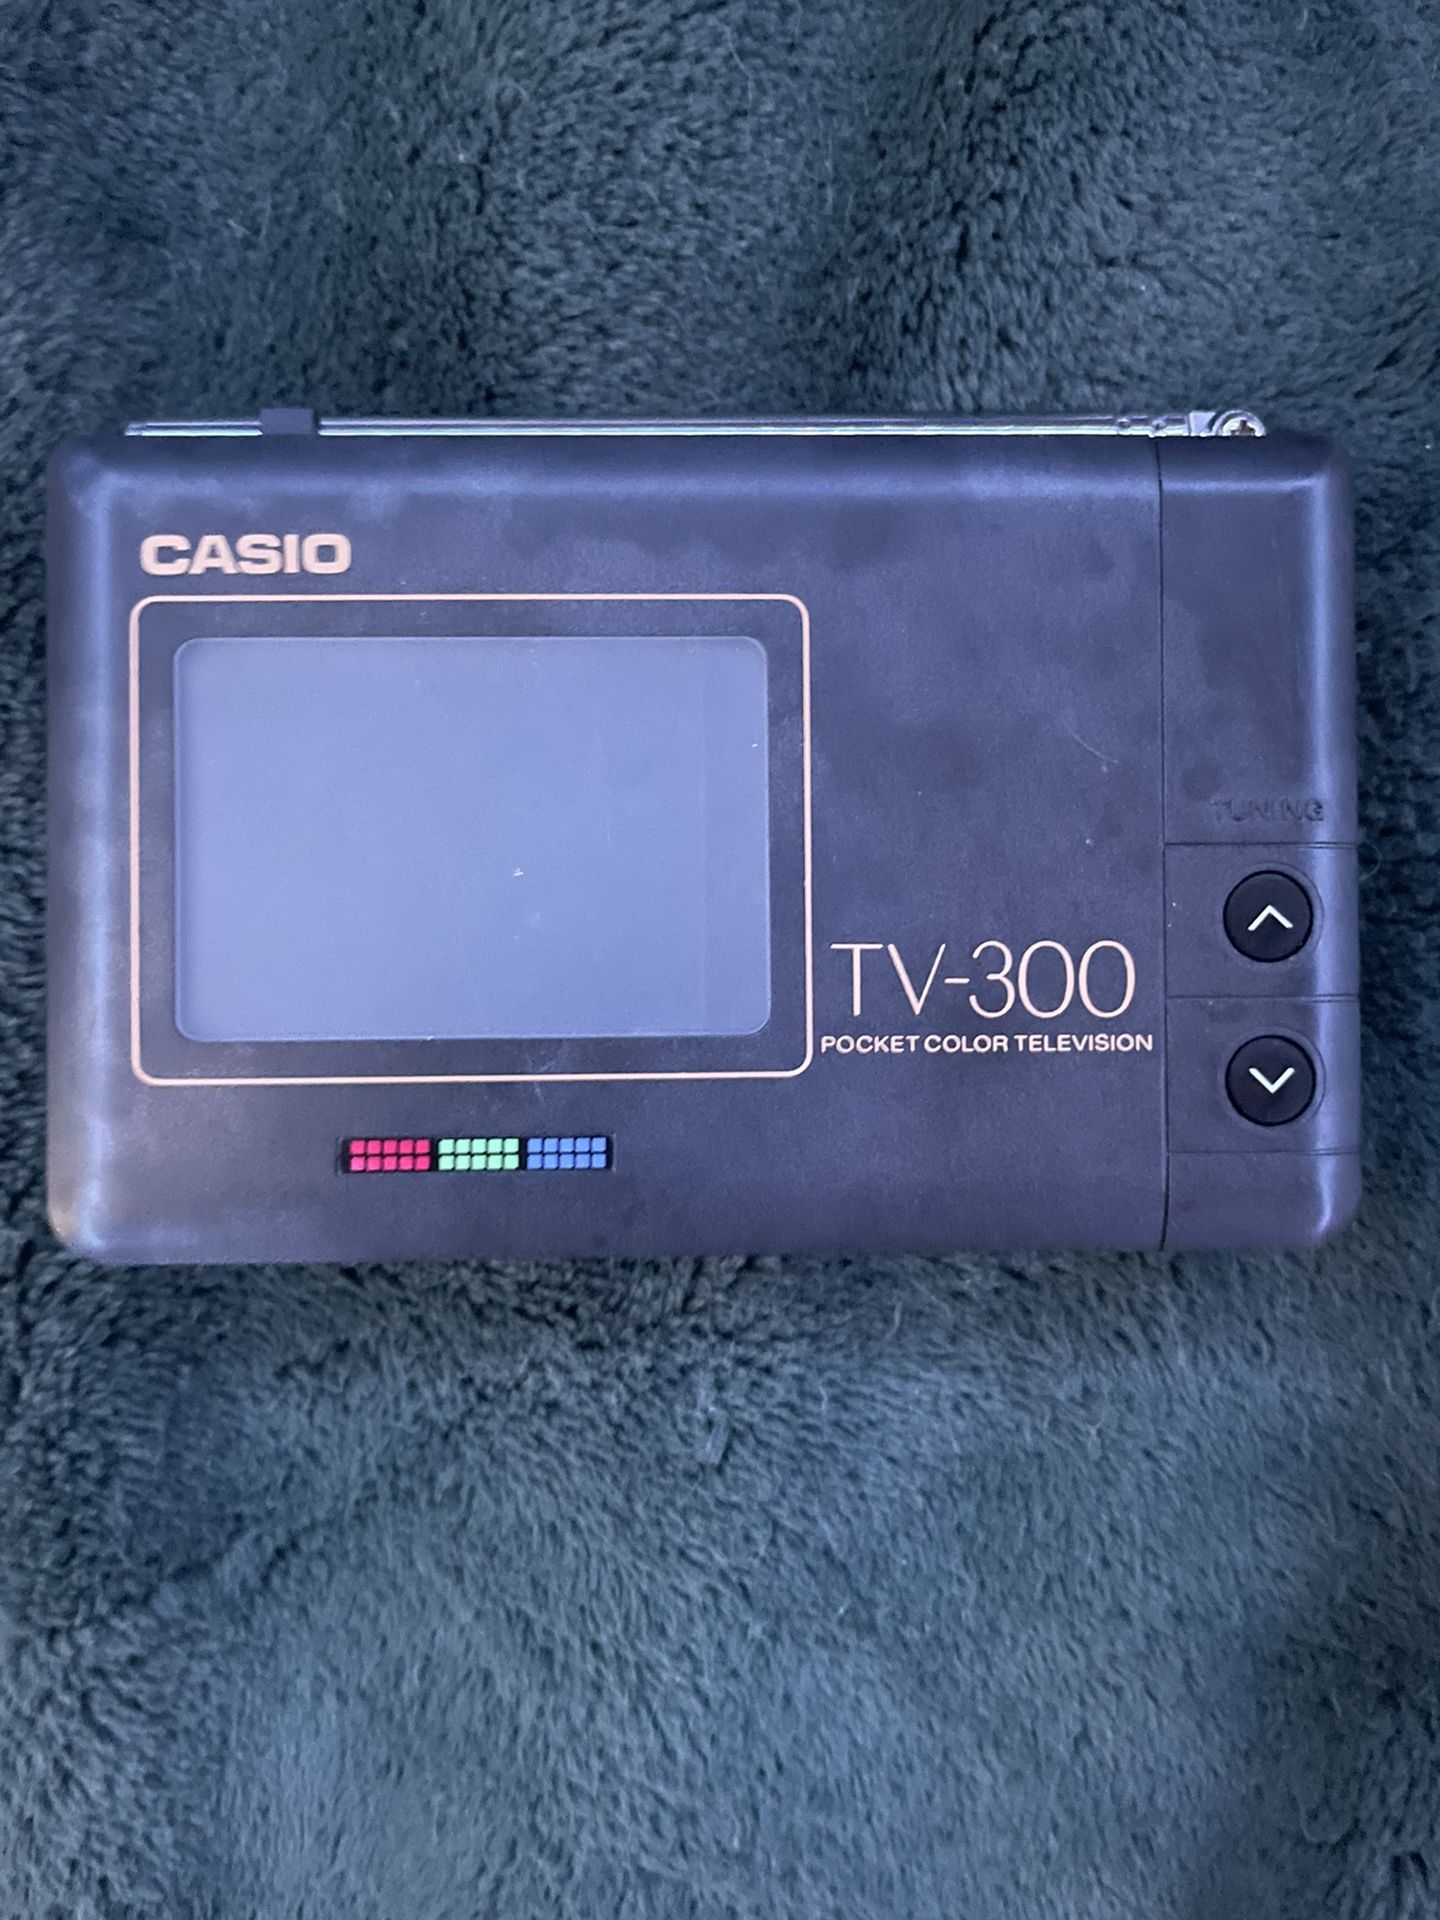 Casio pocket TV